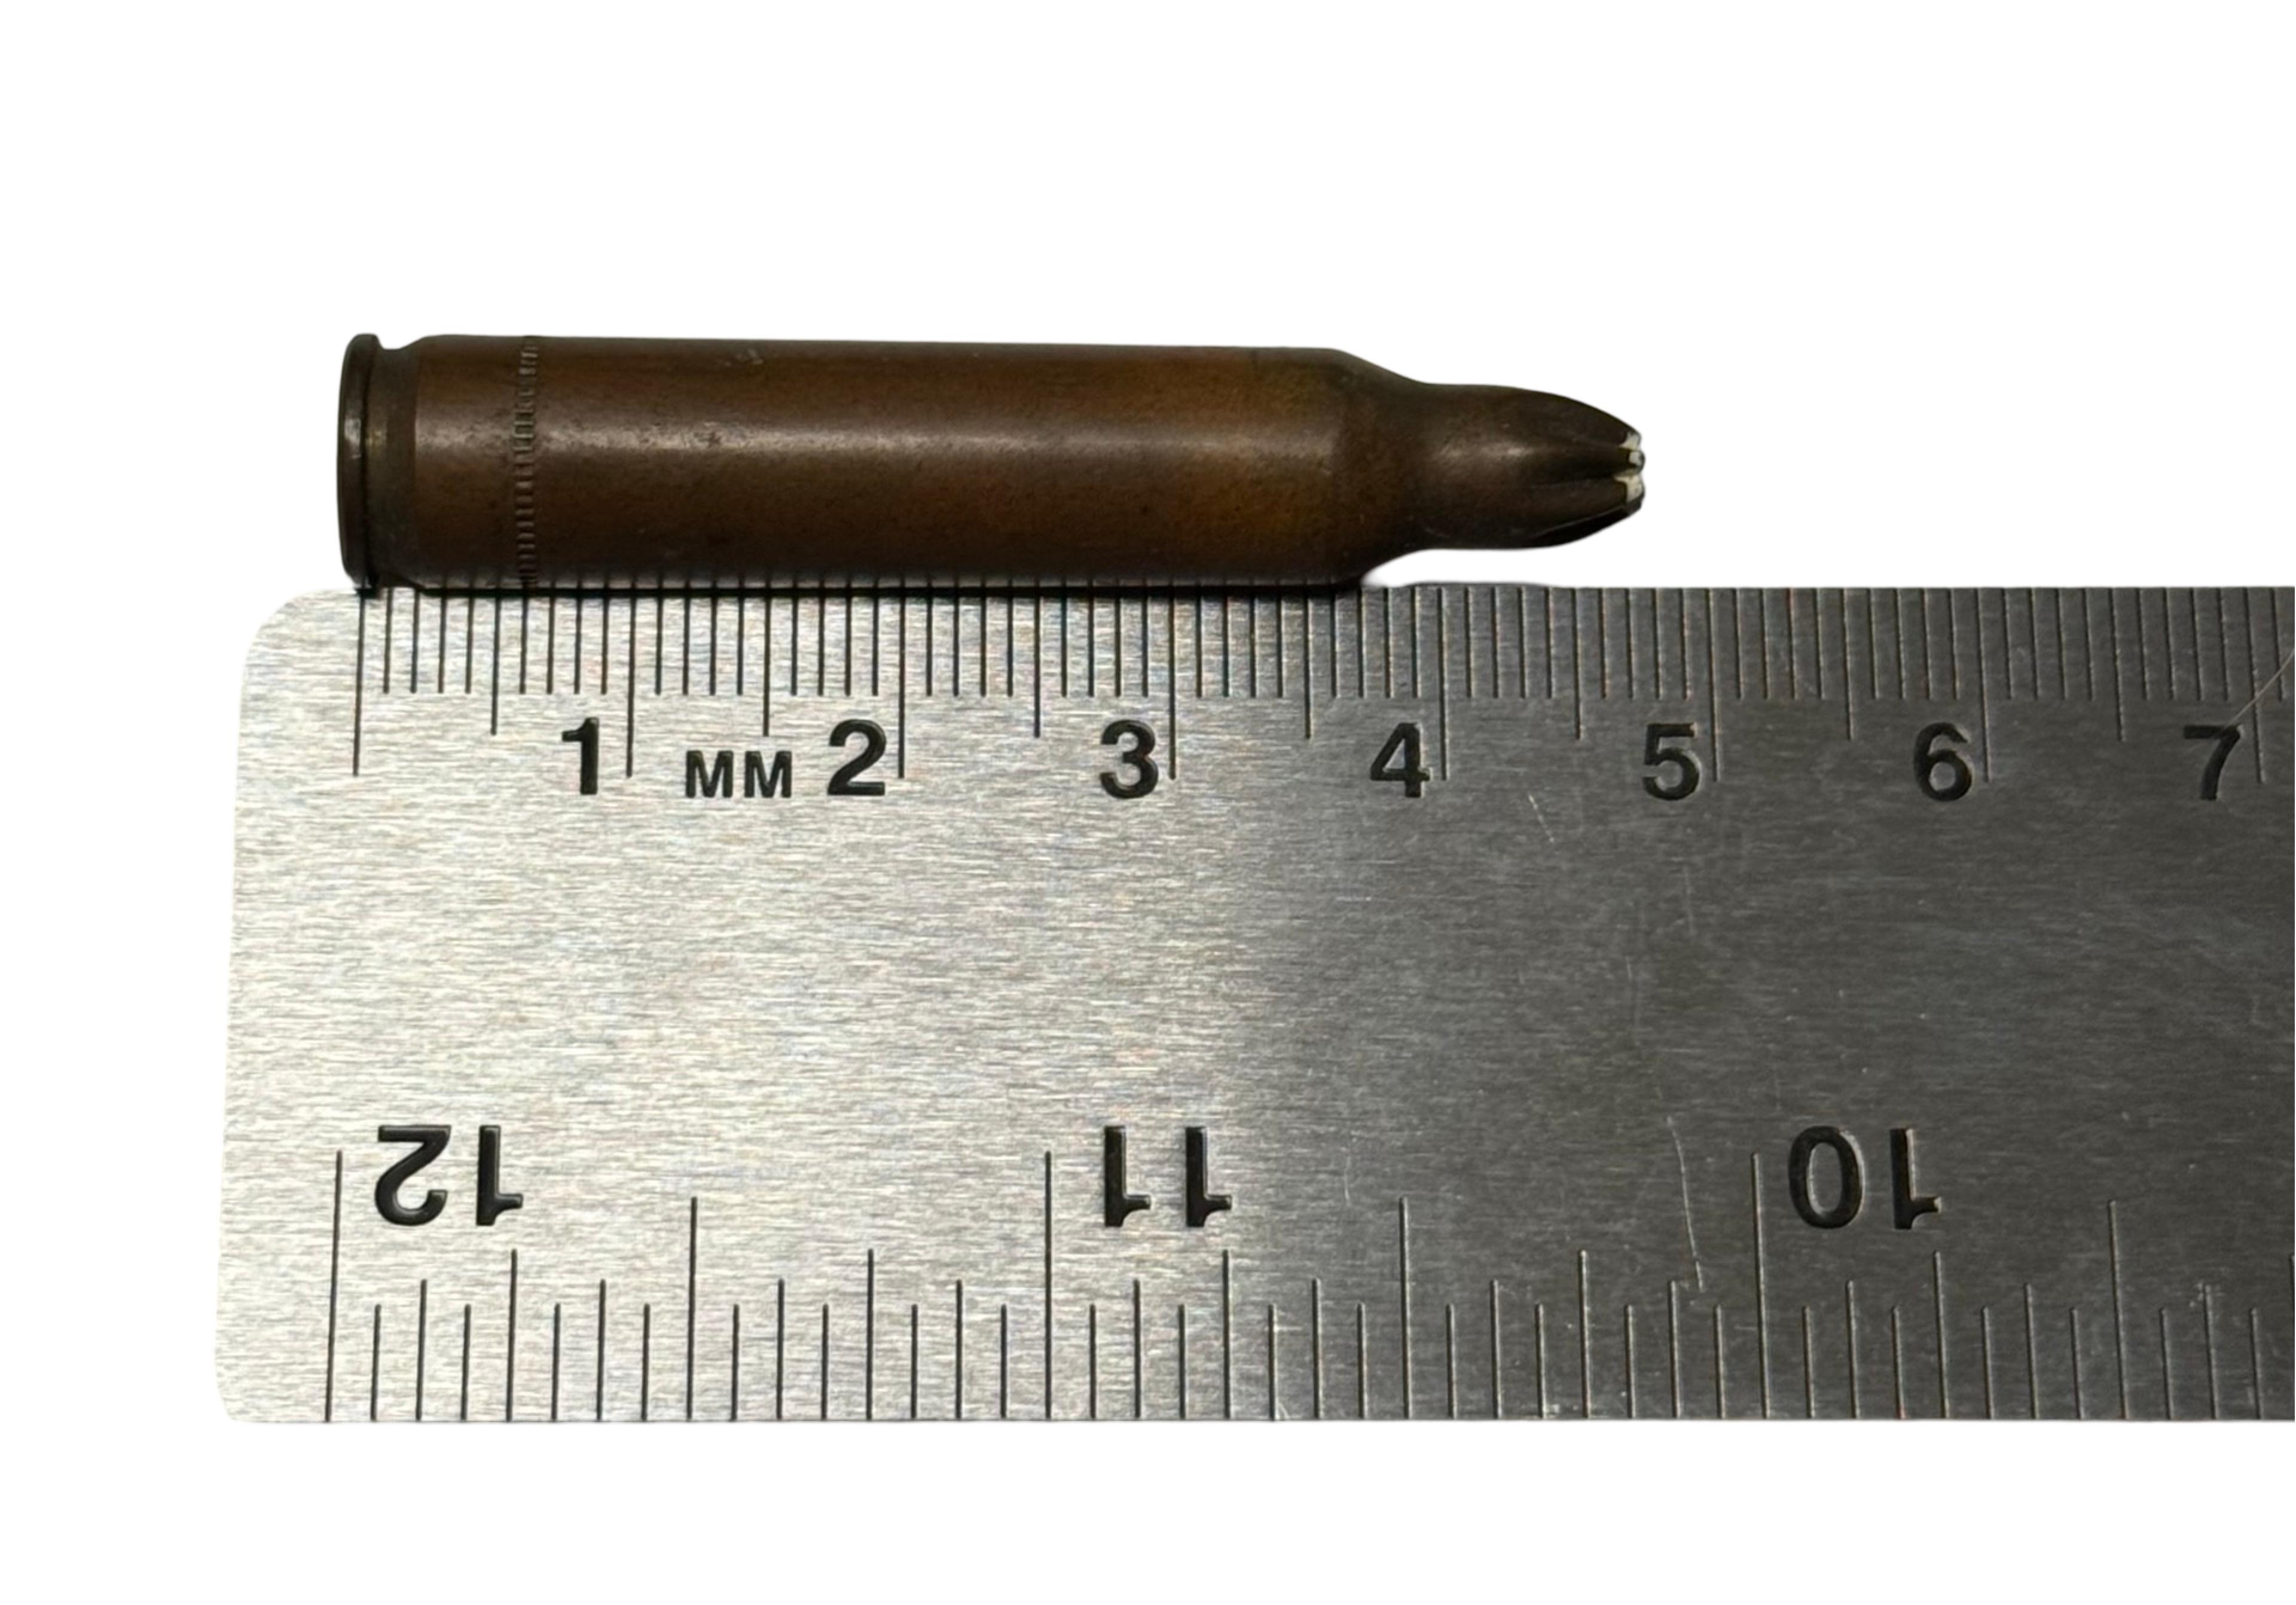 5.56x45mm BLANK Cartridge